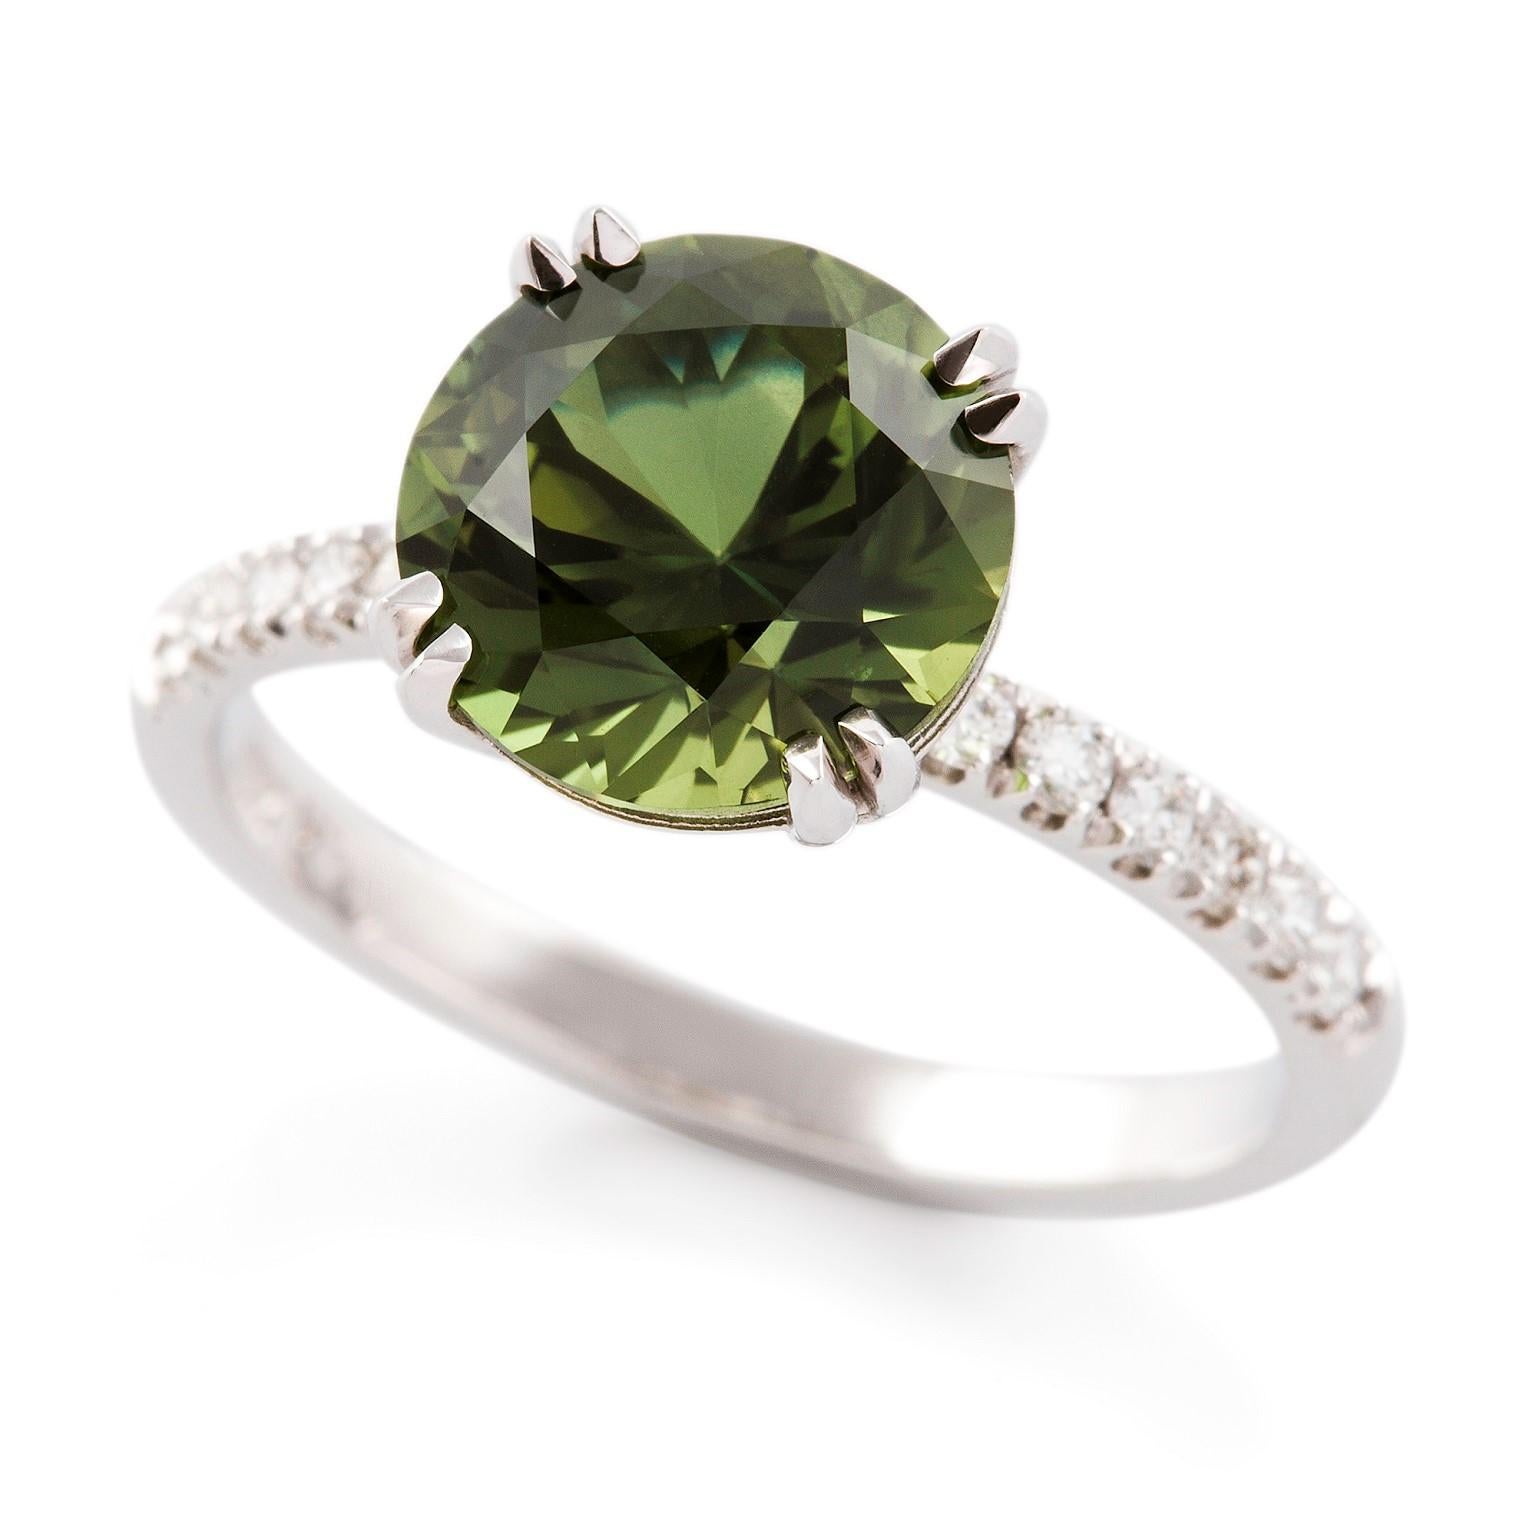 Contemporary Kian Design 3.67 Carat Sapphire Diamond Engagement Ring 18 Carat White Gold